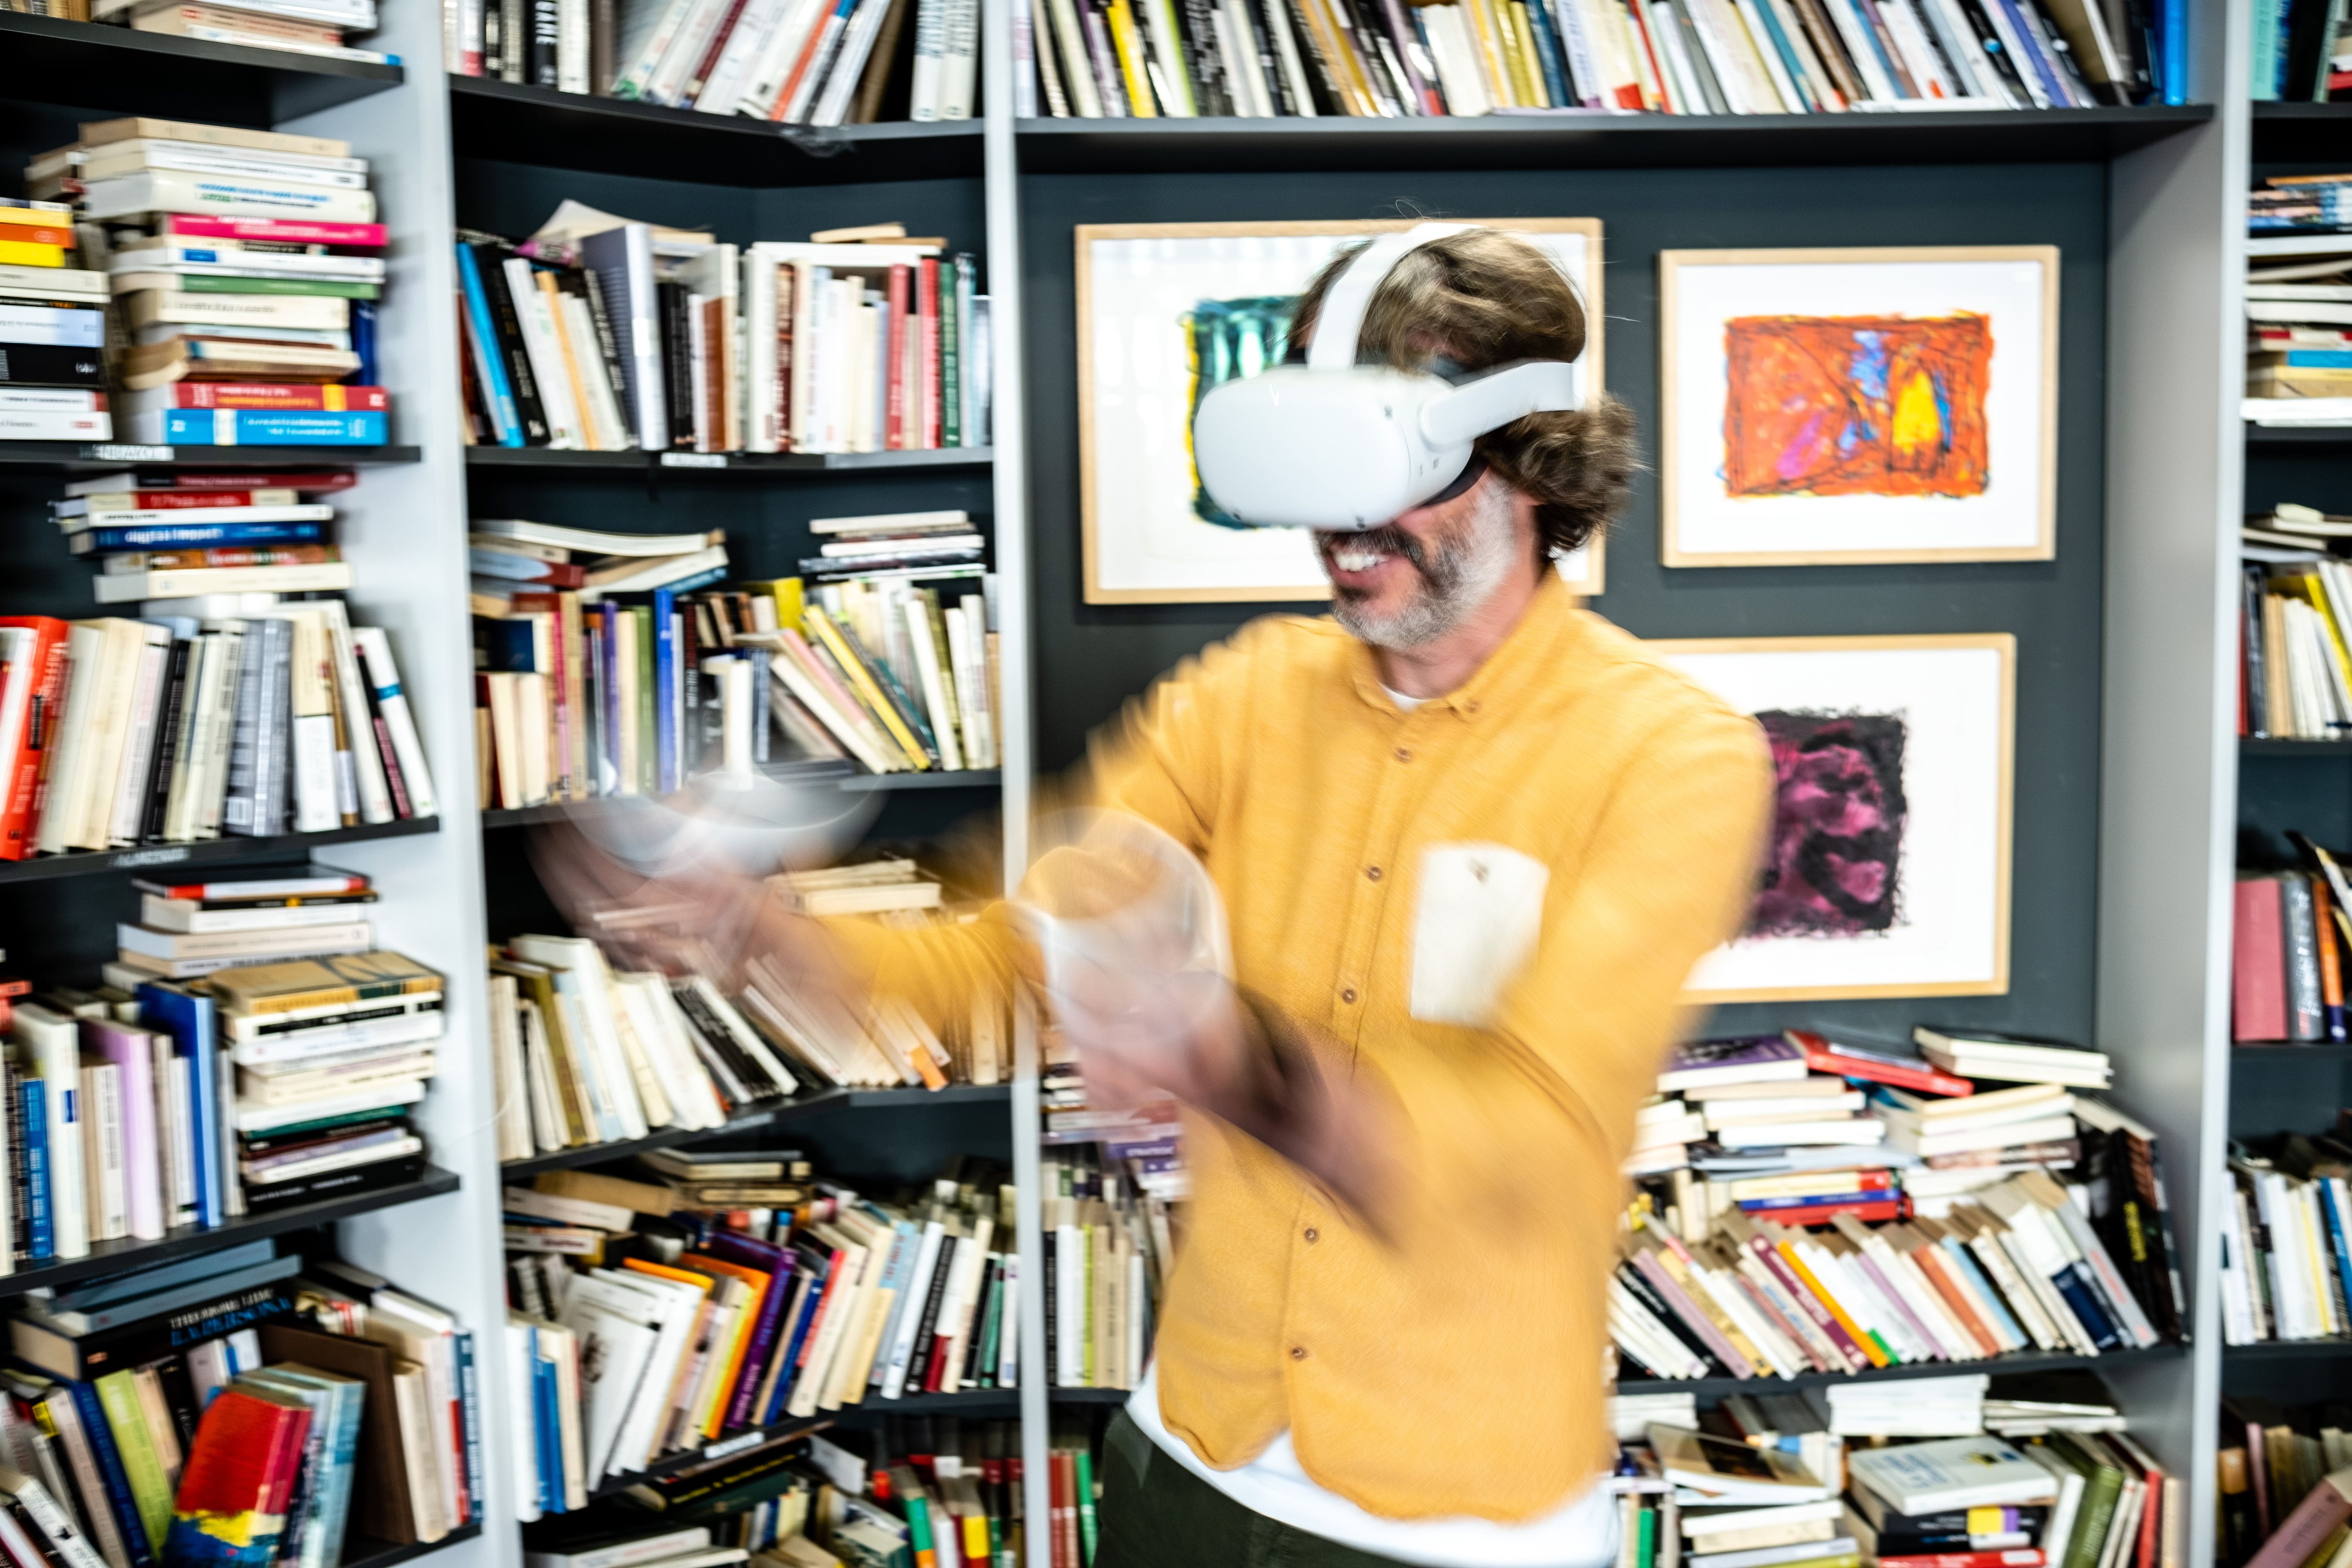 EL PAÍS writer Jordi Pérez Colomé plunges into the metaverse with a virtual reality headset.